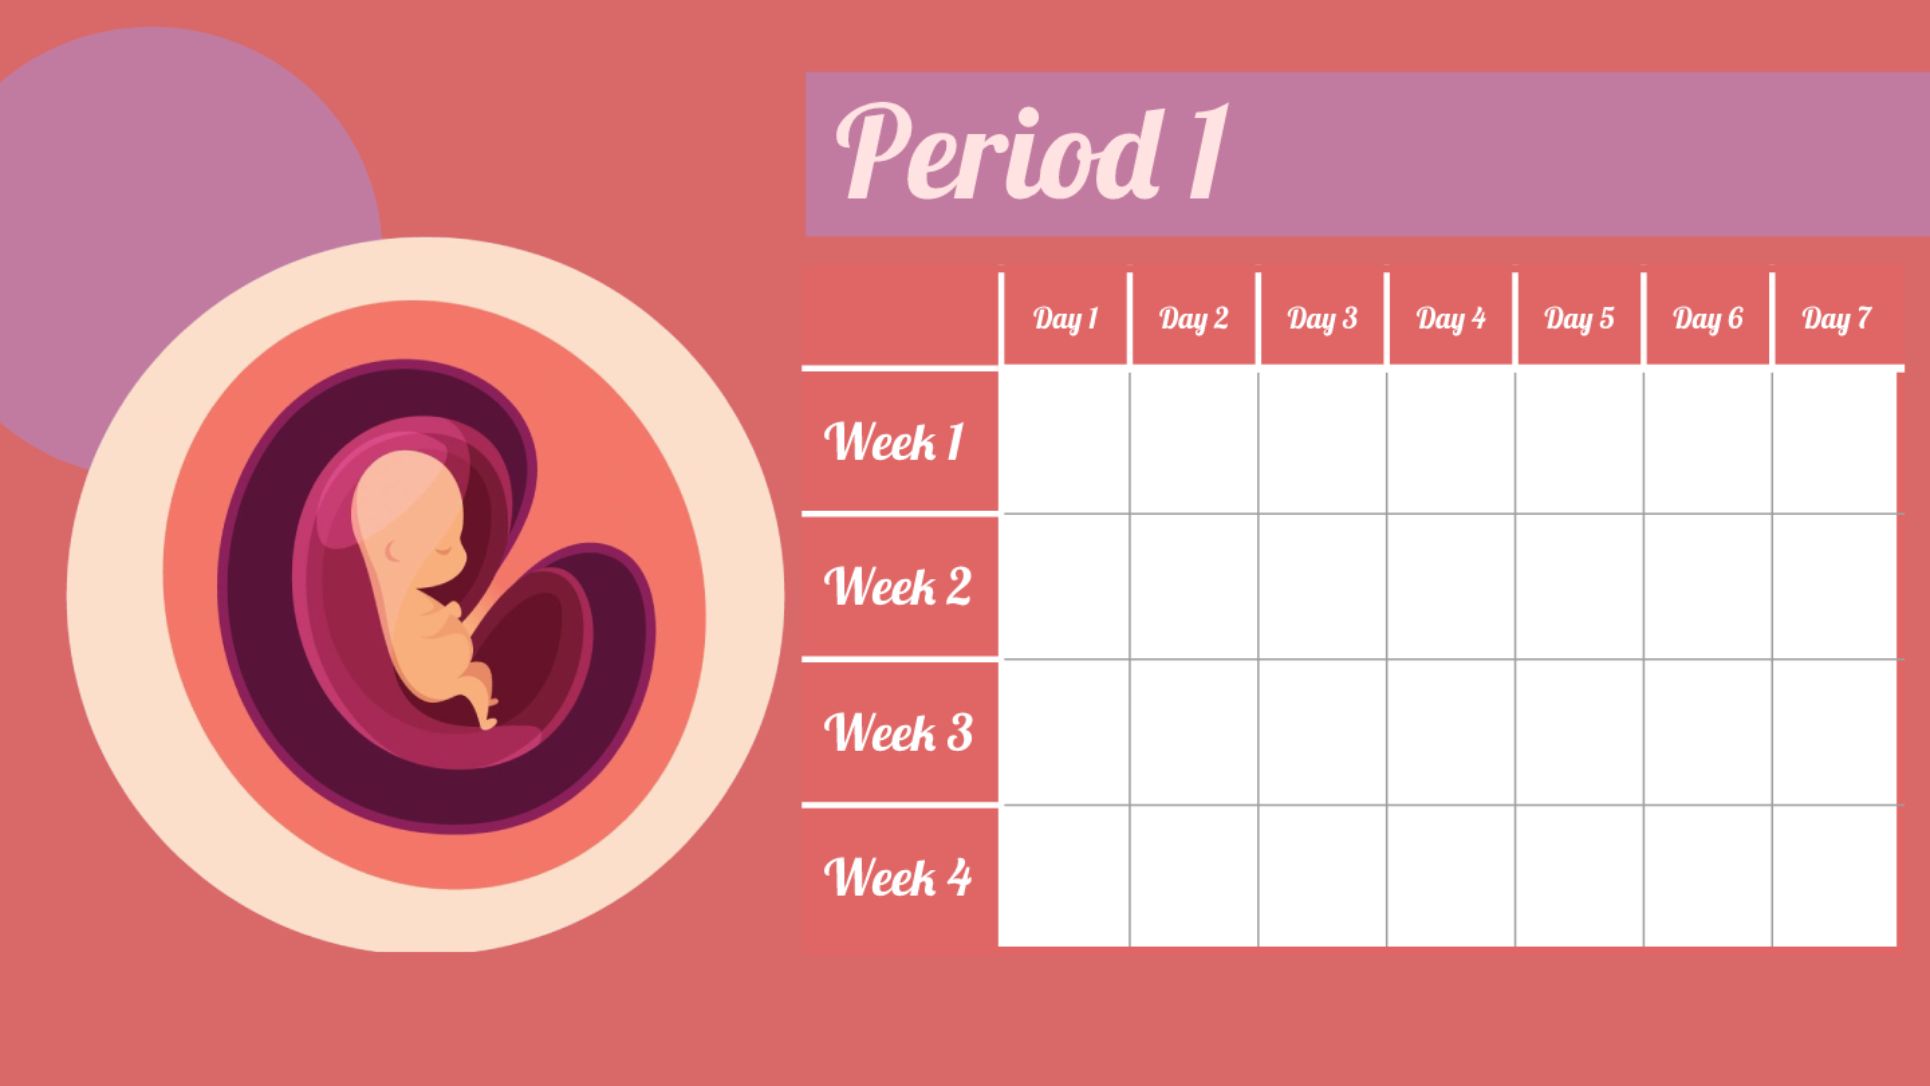 Pregnancy Calendar Period 1 Template for Google Slides